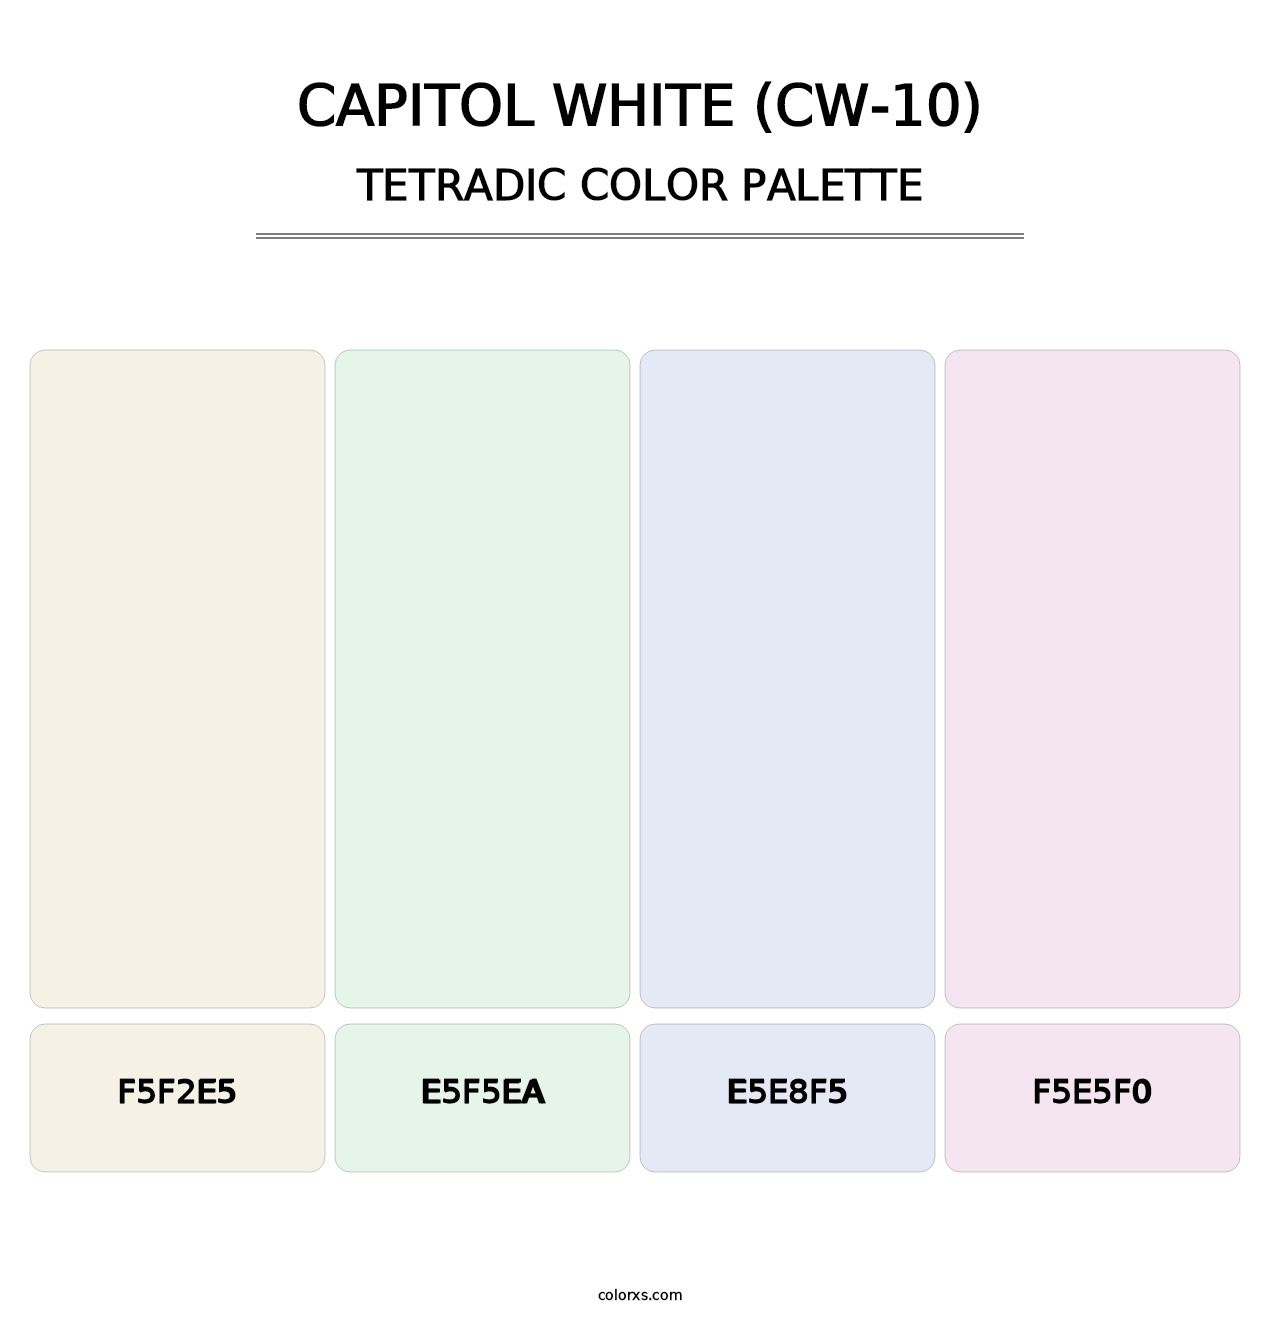 Capitol White (CW-10) - Tetradic Color Palette